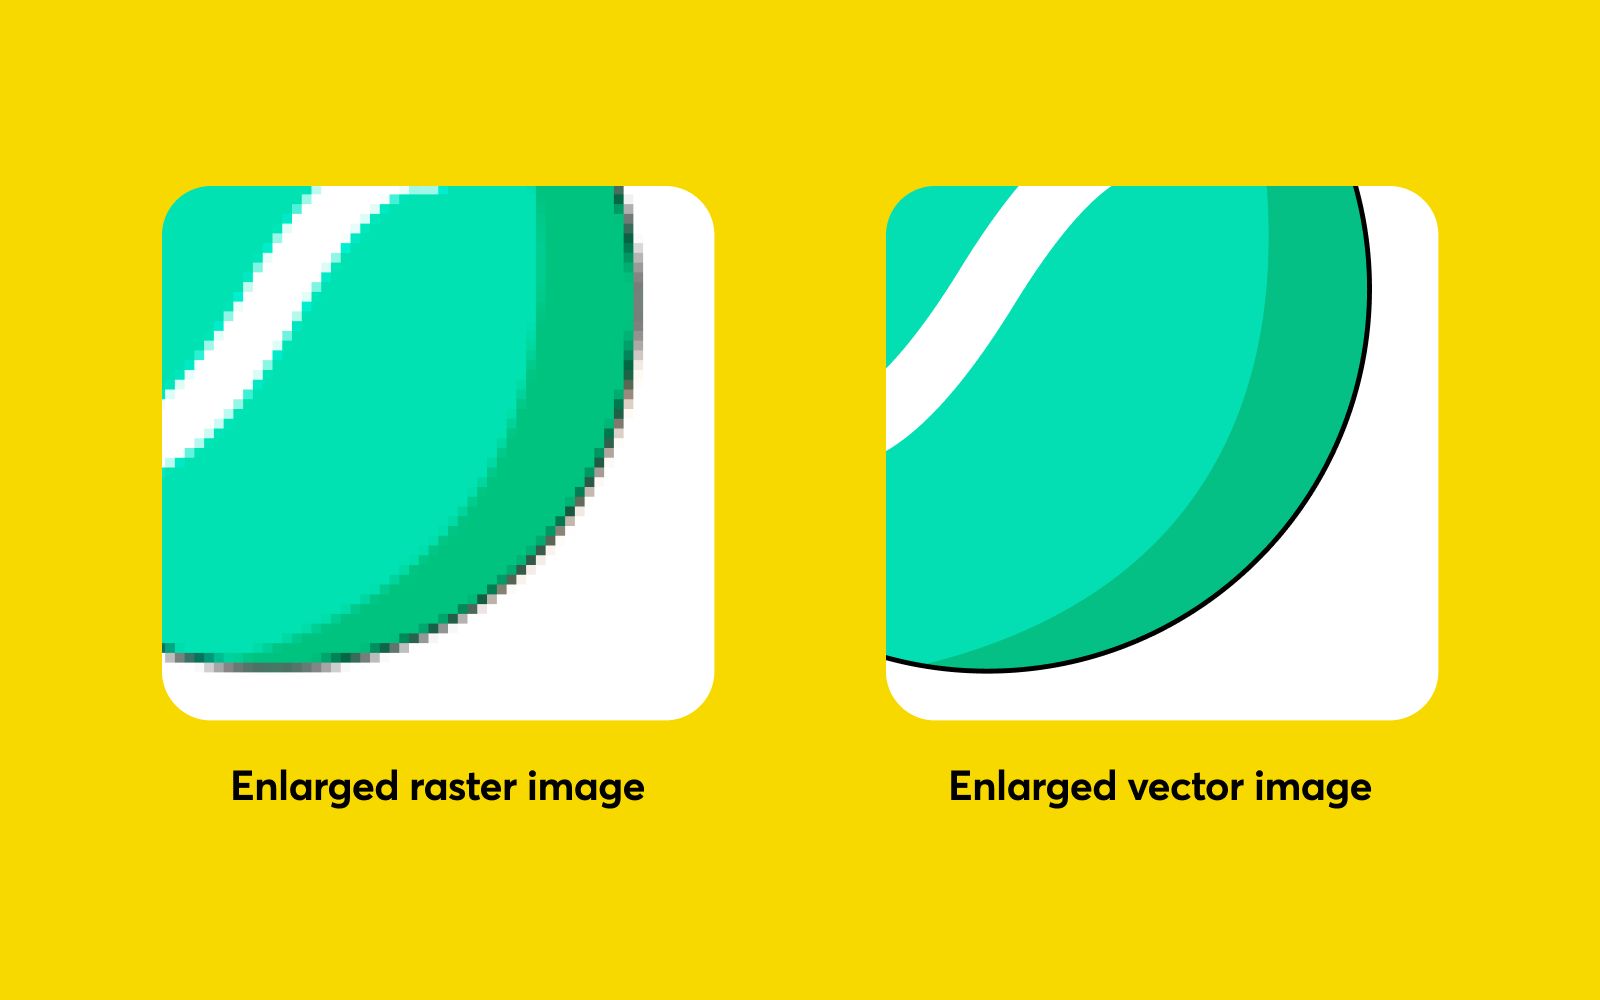 Enlarging a raster vs vector image